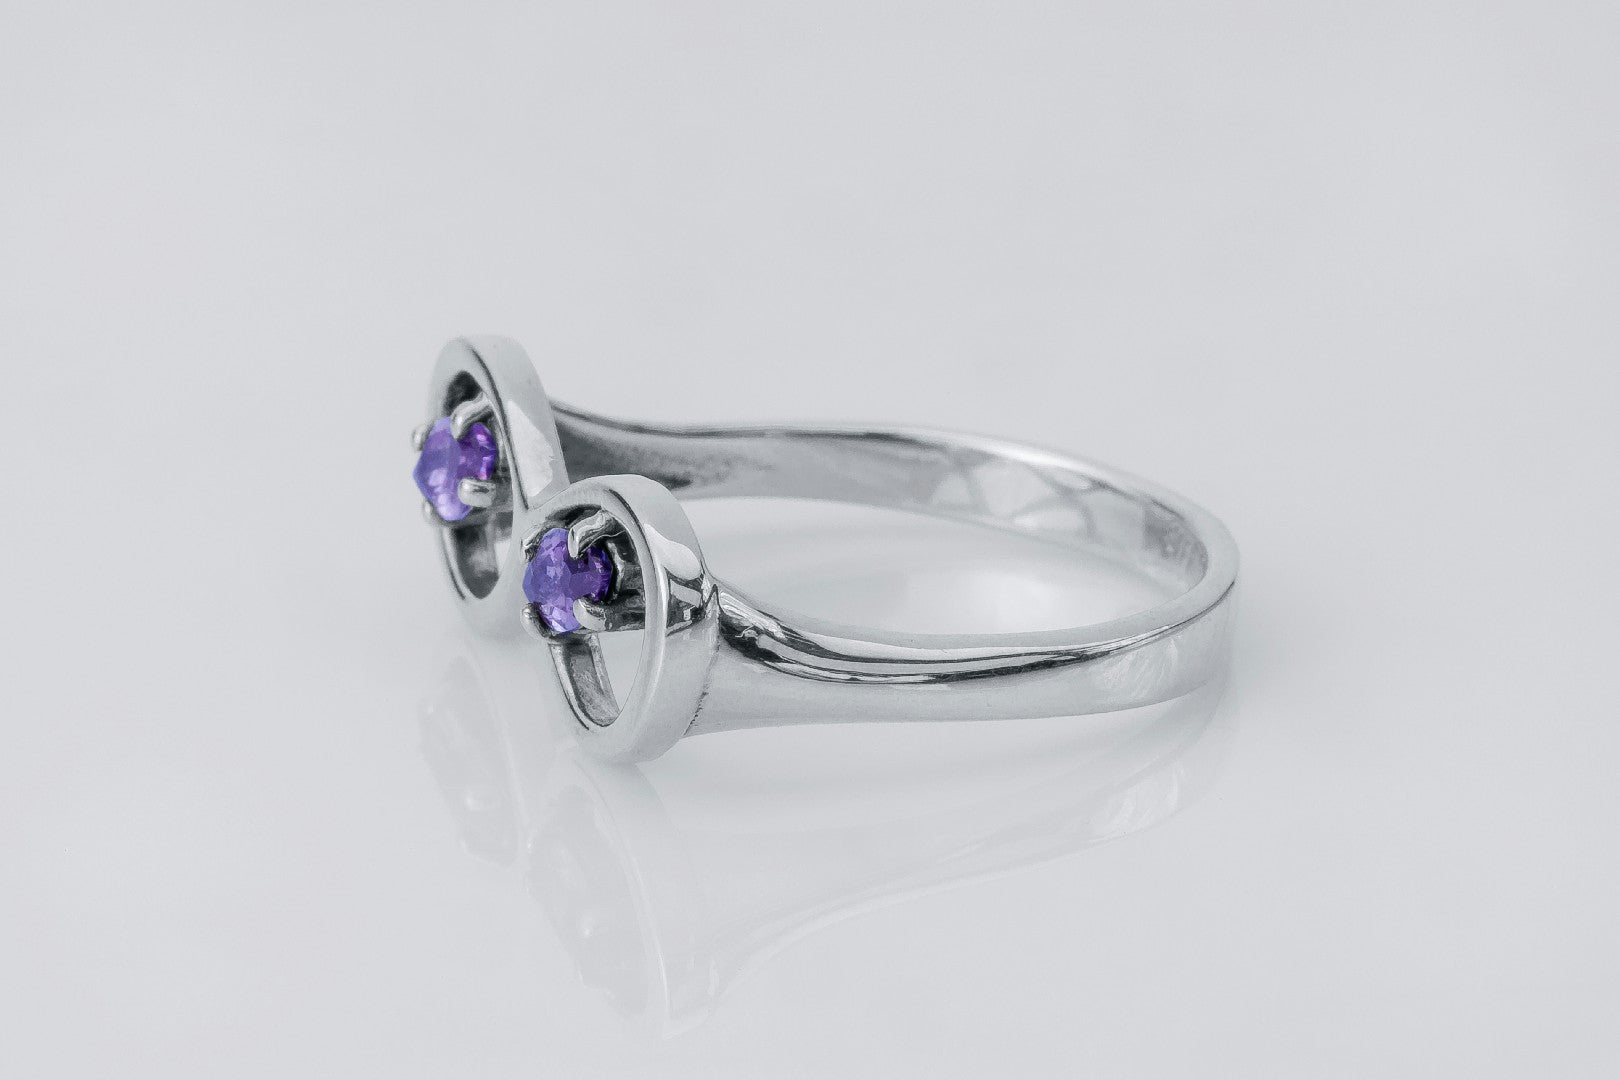 Sunglasses Ring with Purple Gems